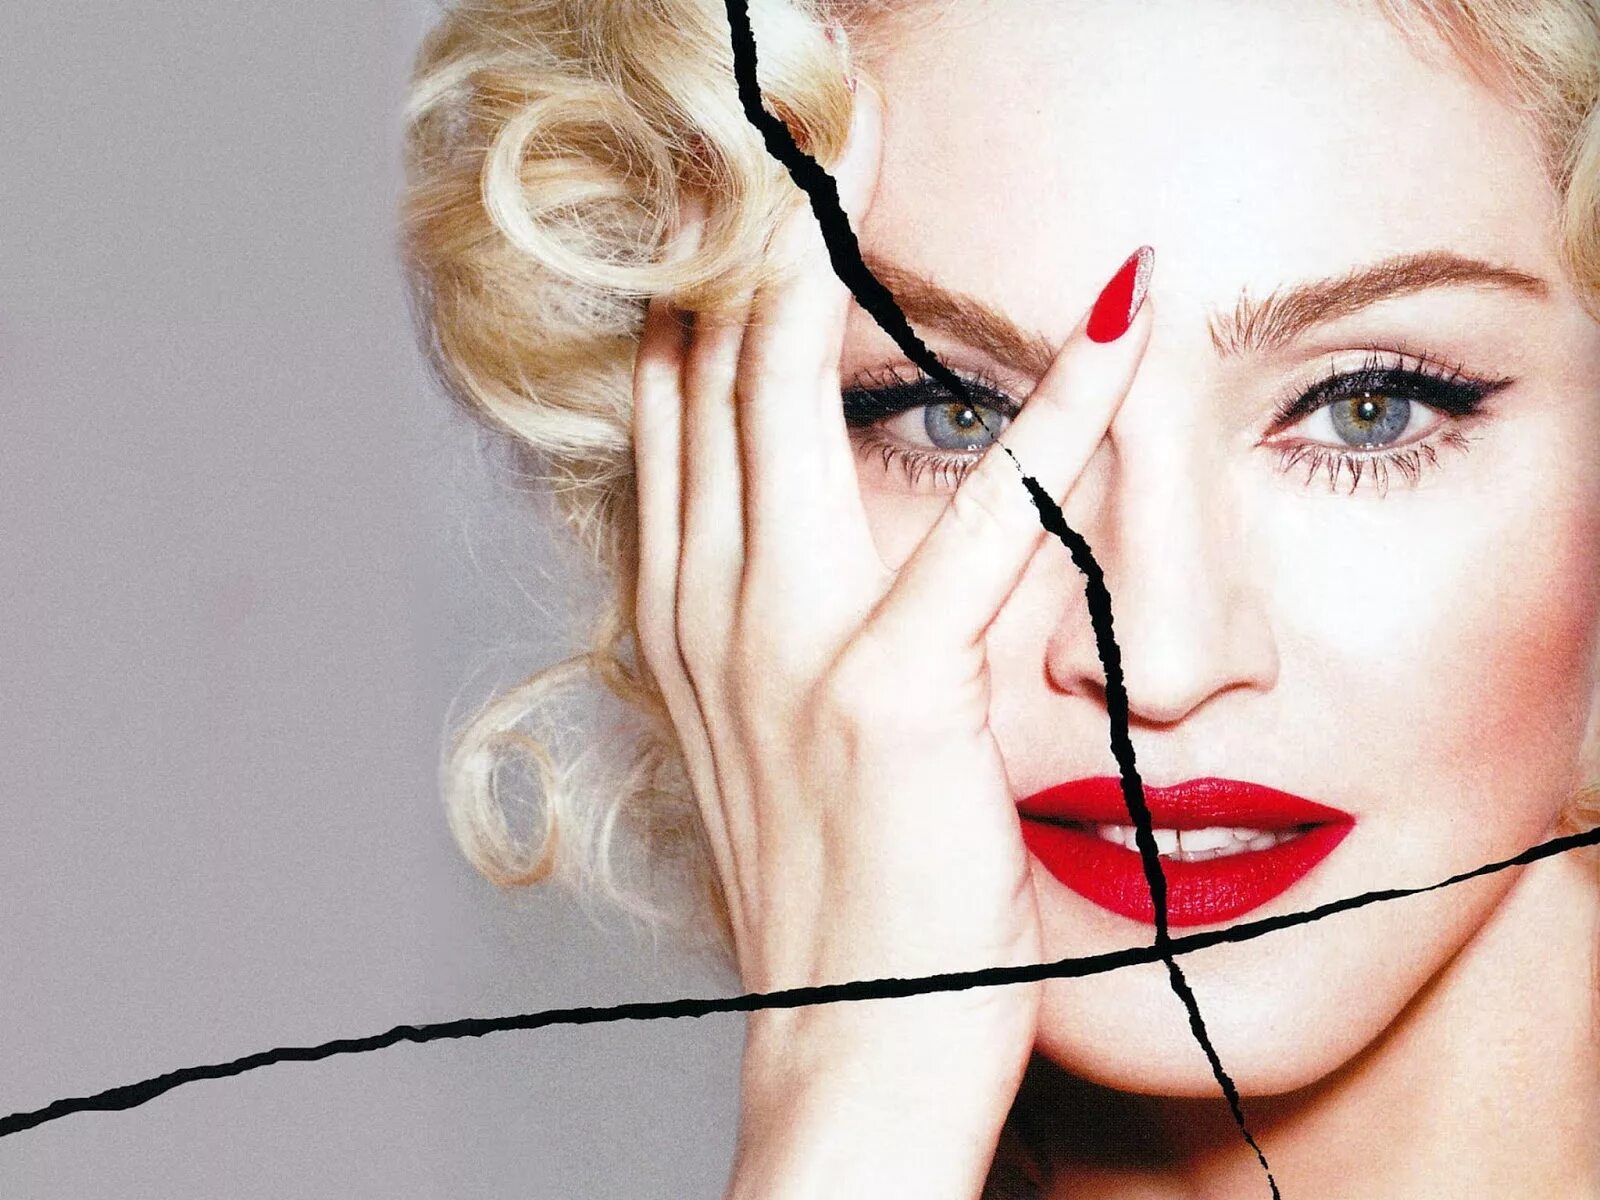 Madonna "Rebel Heart". Мадонна Мессия. Портрет Мадонны. Певица Мадонна с красным крестом. Madonna back that up